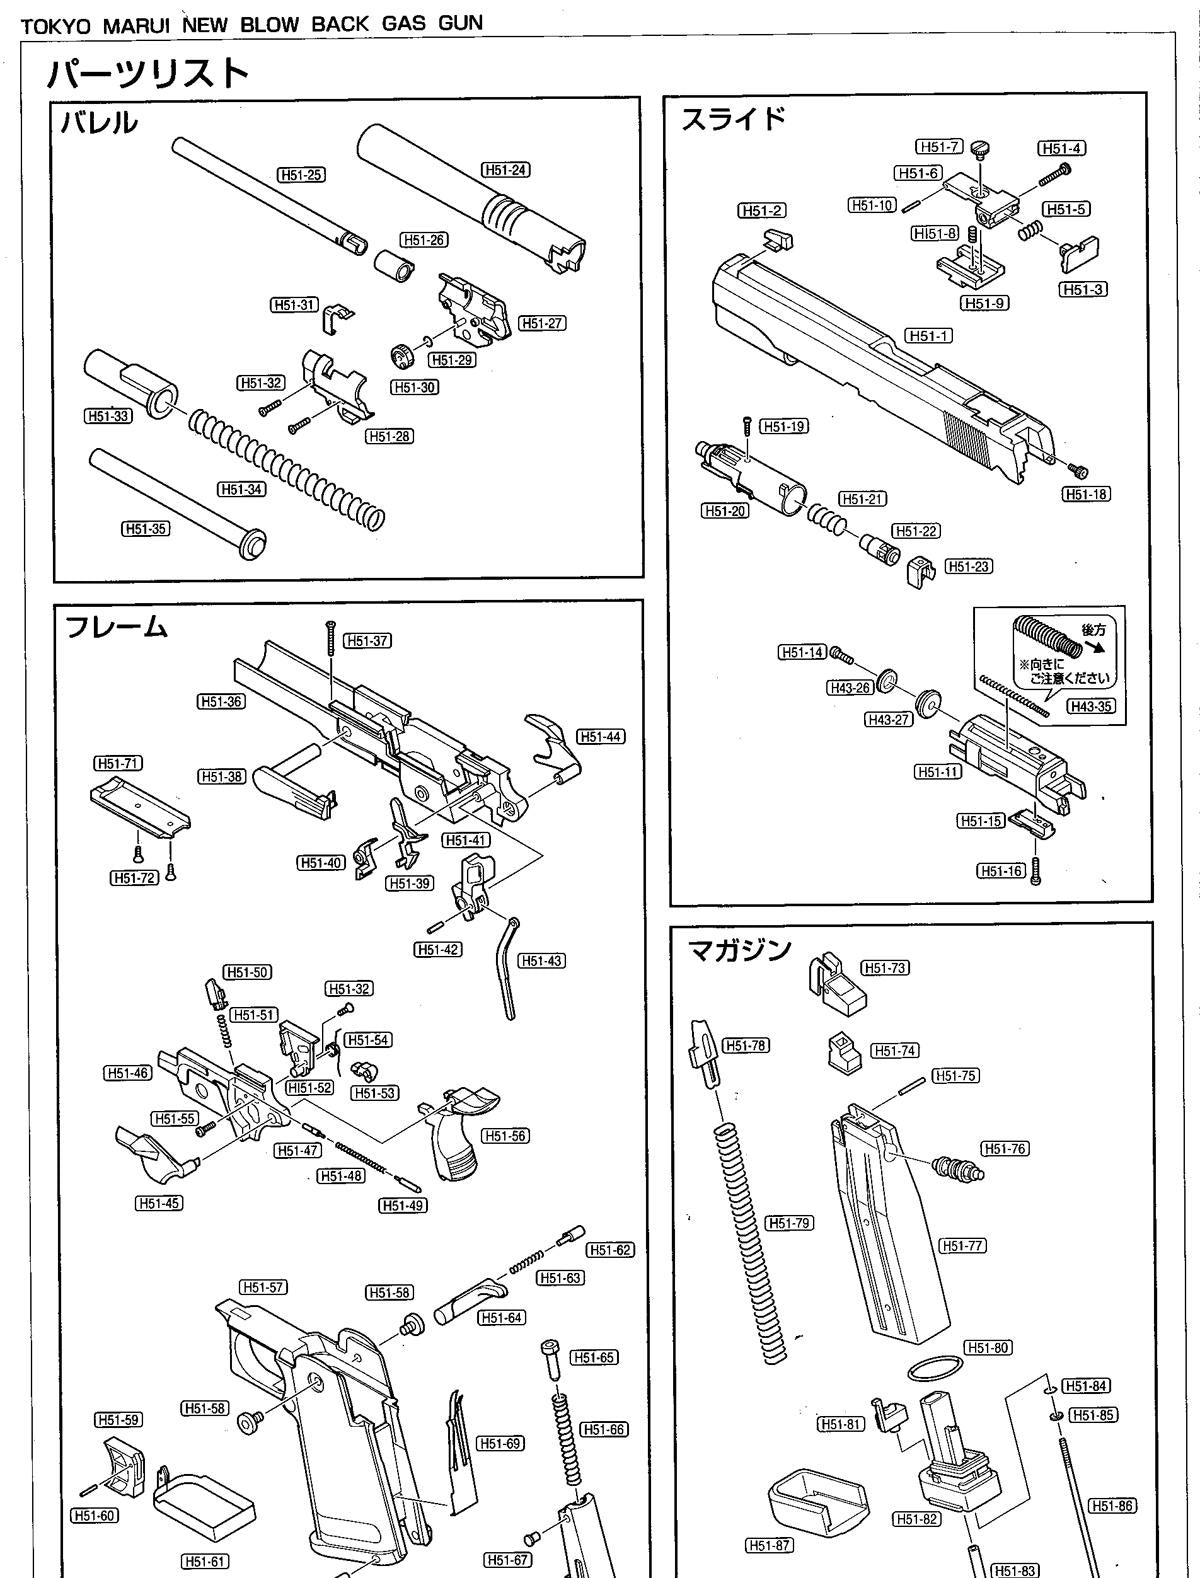 Tokyo Marui Hi-Capa - Replacement Part H51-87 - Magazine Bumper Base Plate